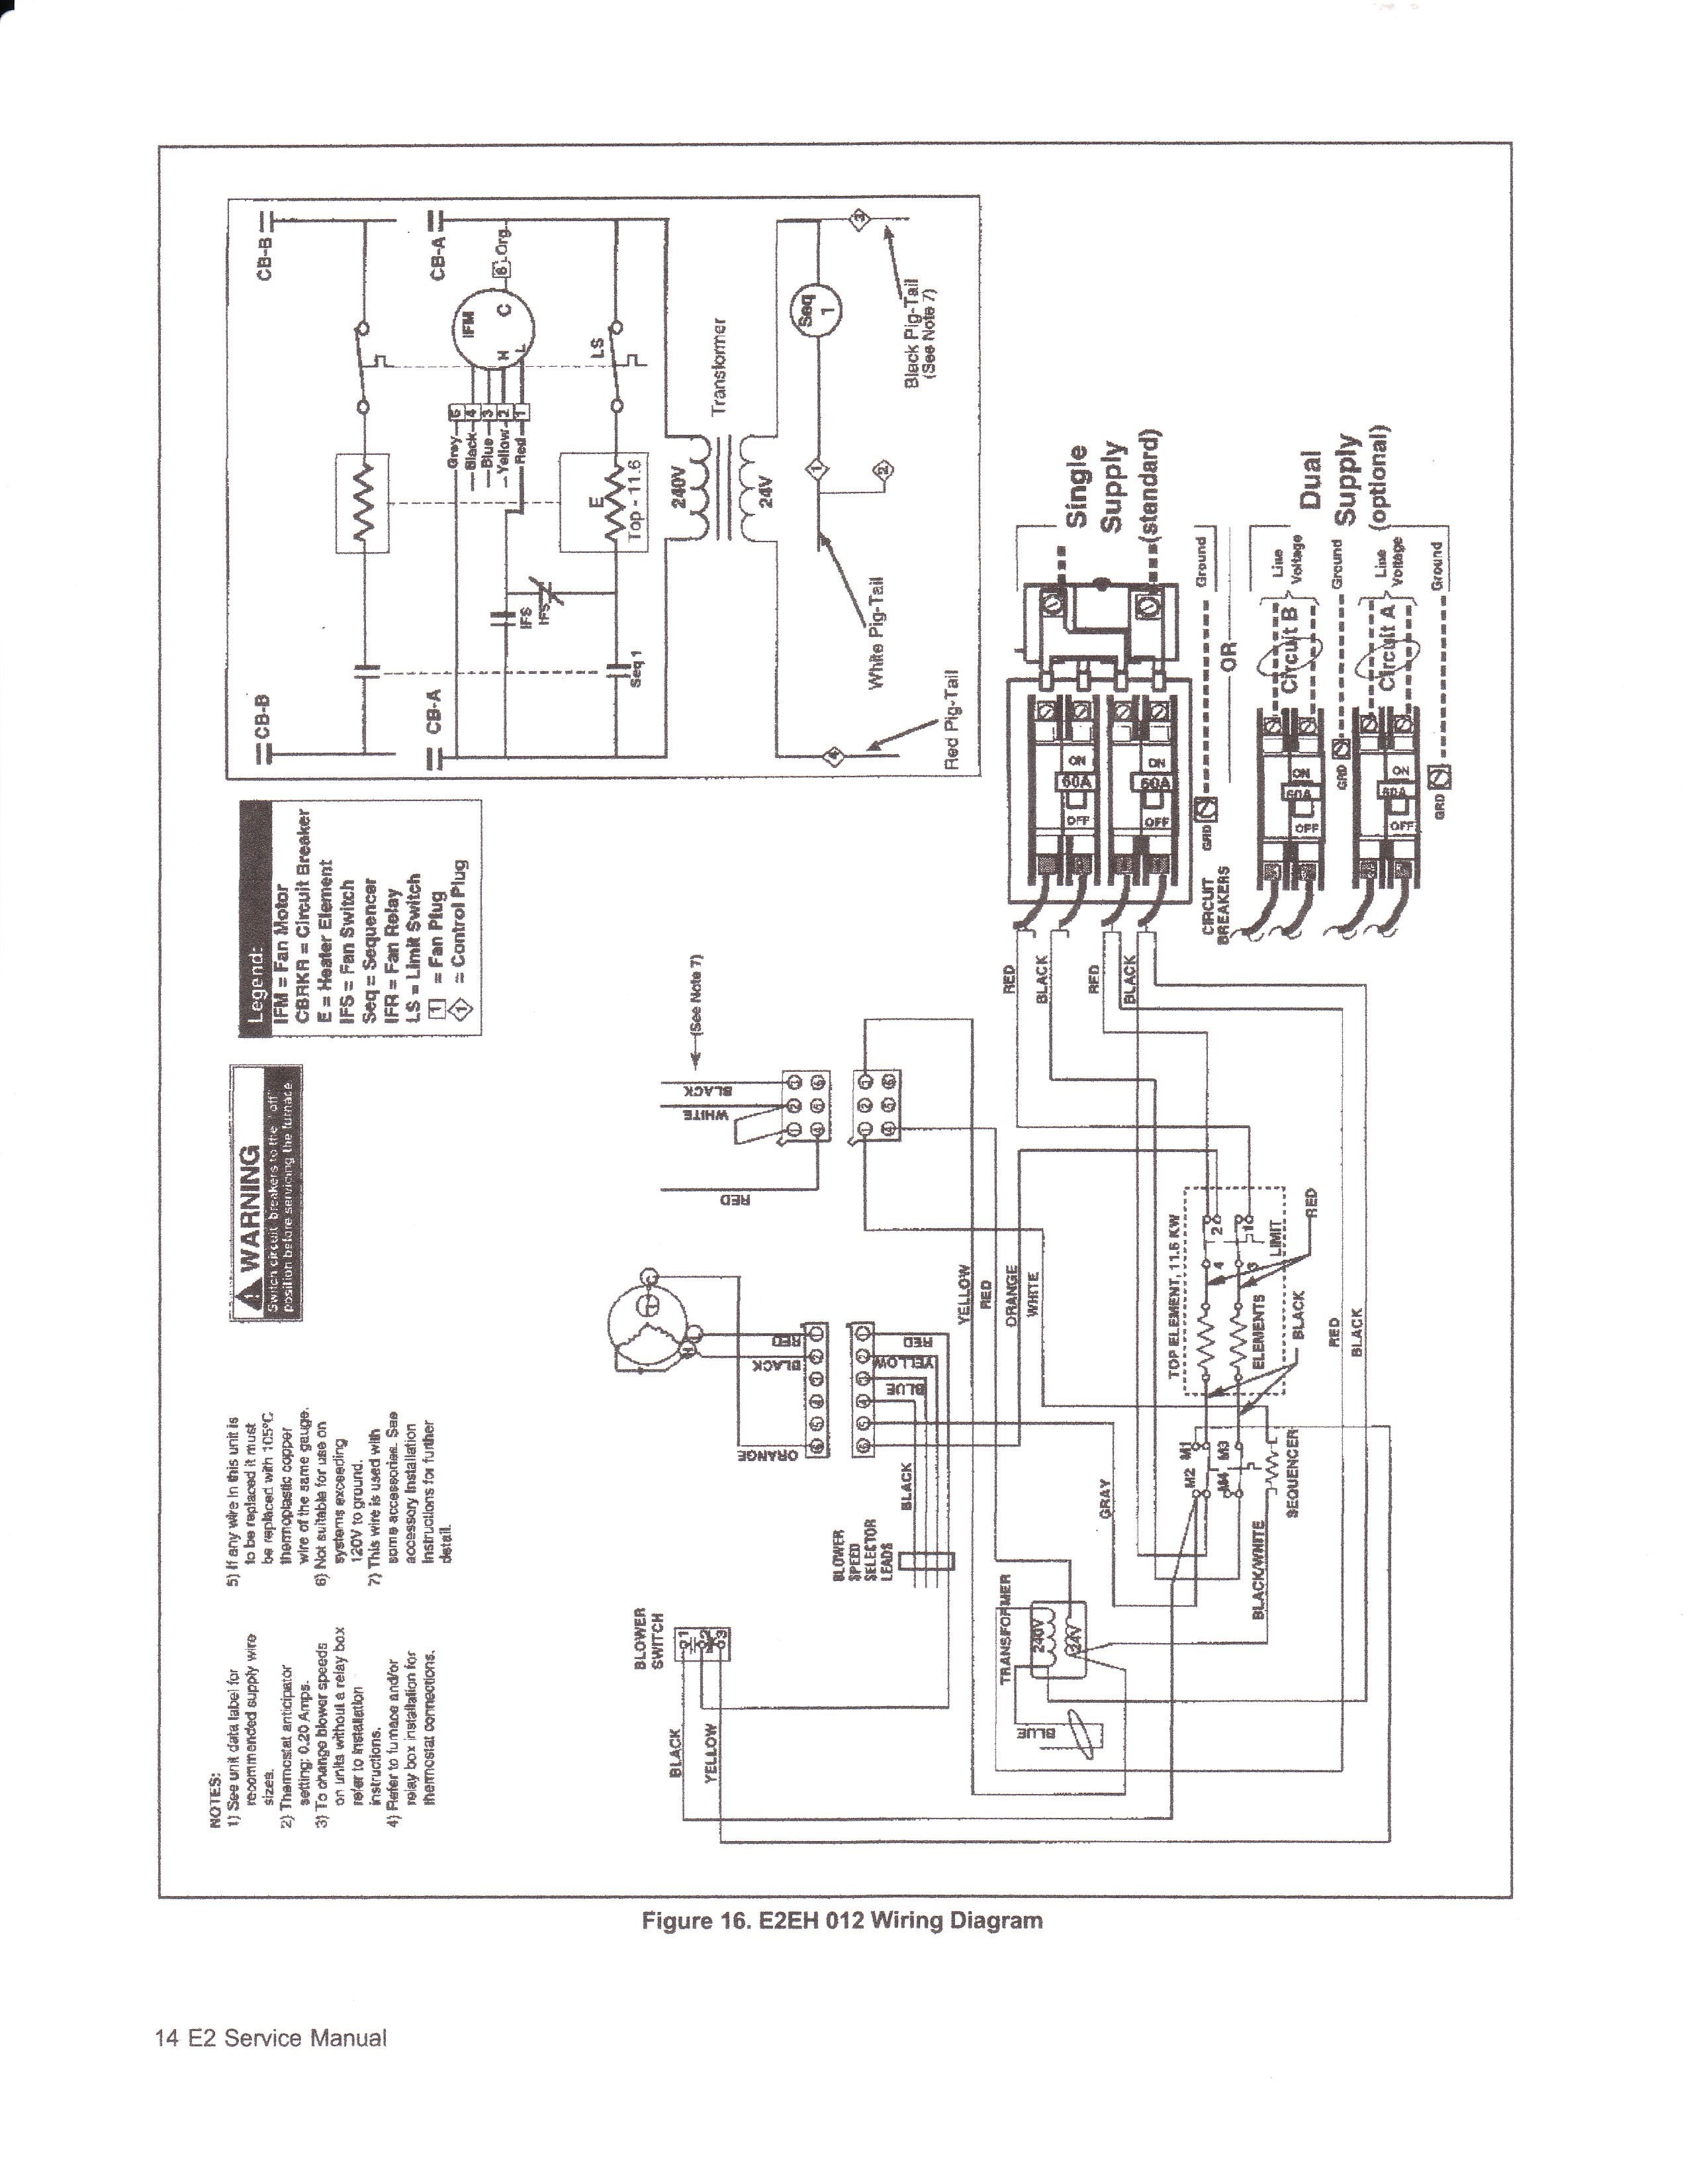 Gibson Hvac Wiring Diagram New nordyne Wiring Diagram Electric Furnace New Intertherm Electric